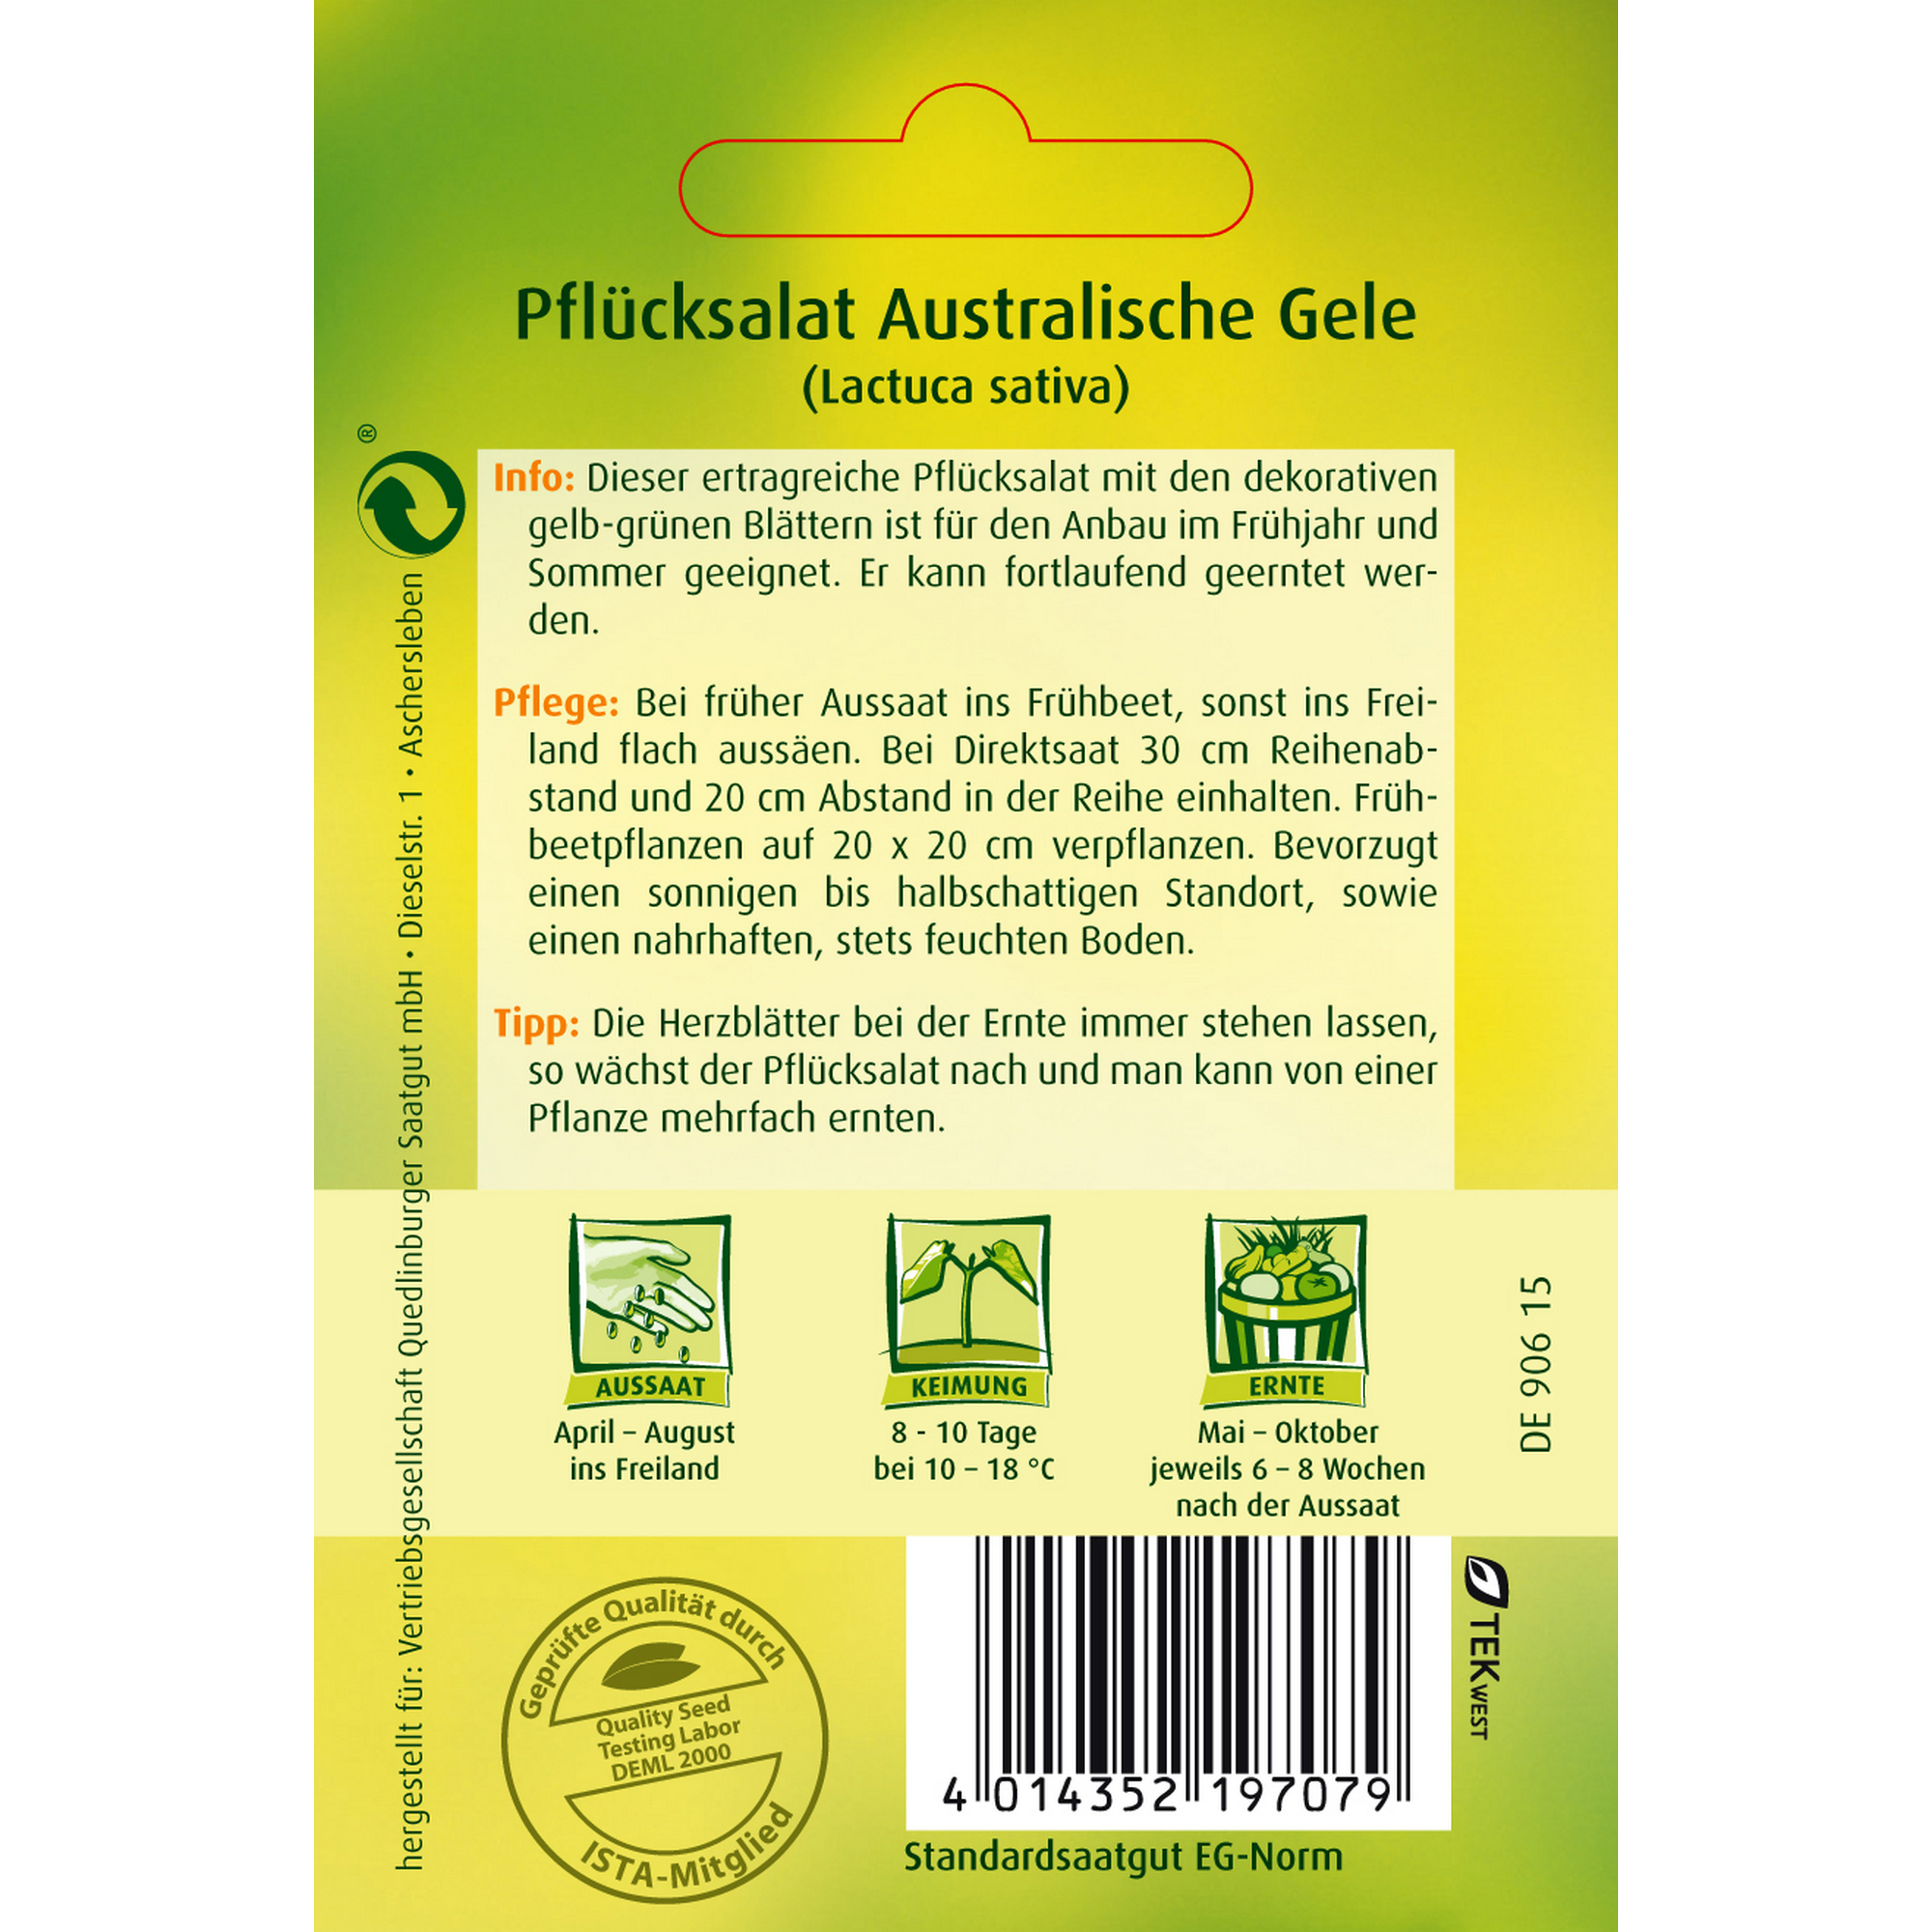 Pfuecksalat 'Australische Gele' + product picture